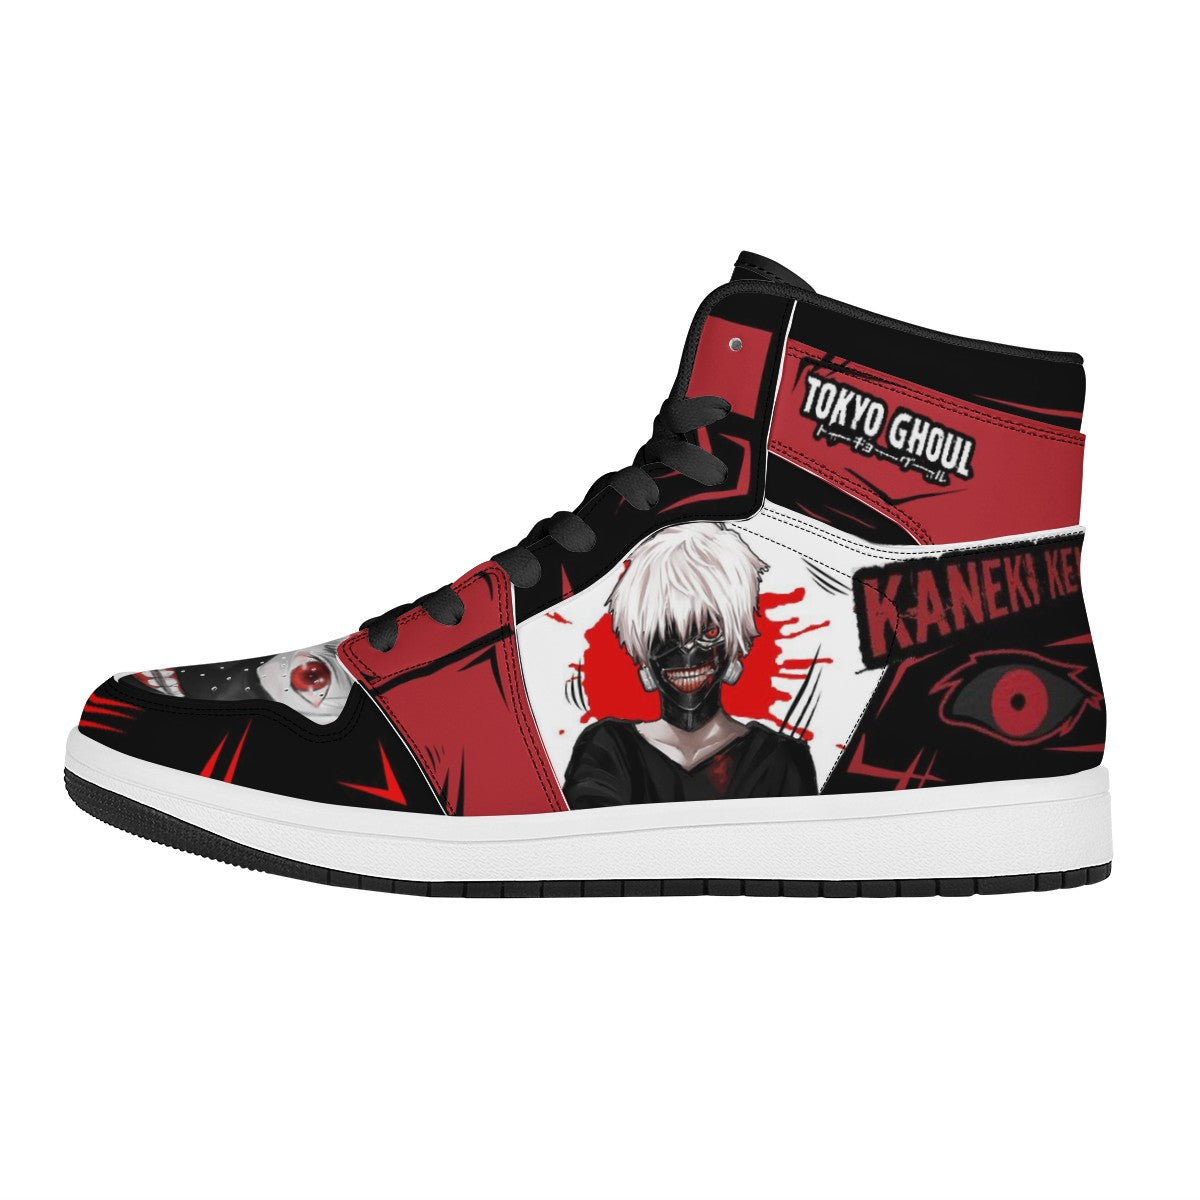 Ken Kaneki Custom Nike Air Jordan 1 Leather Sneaker